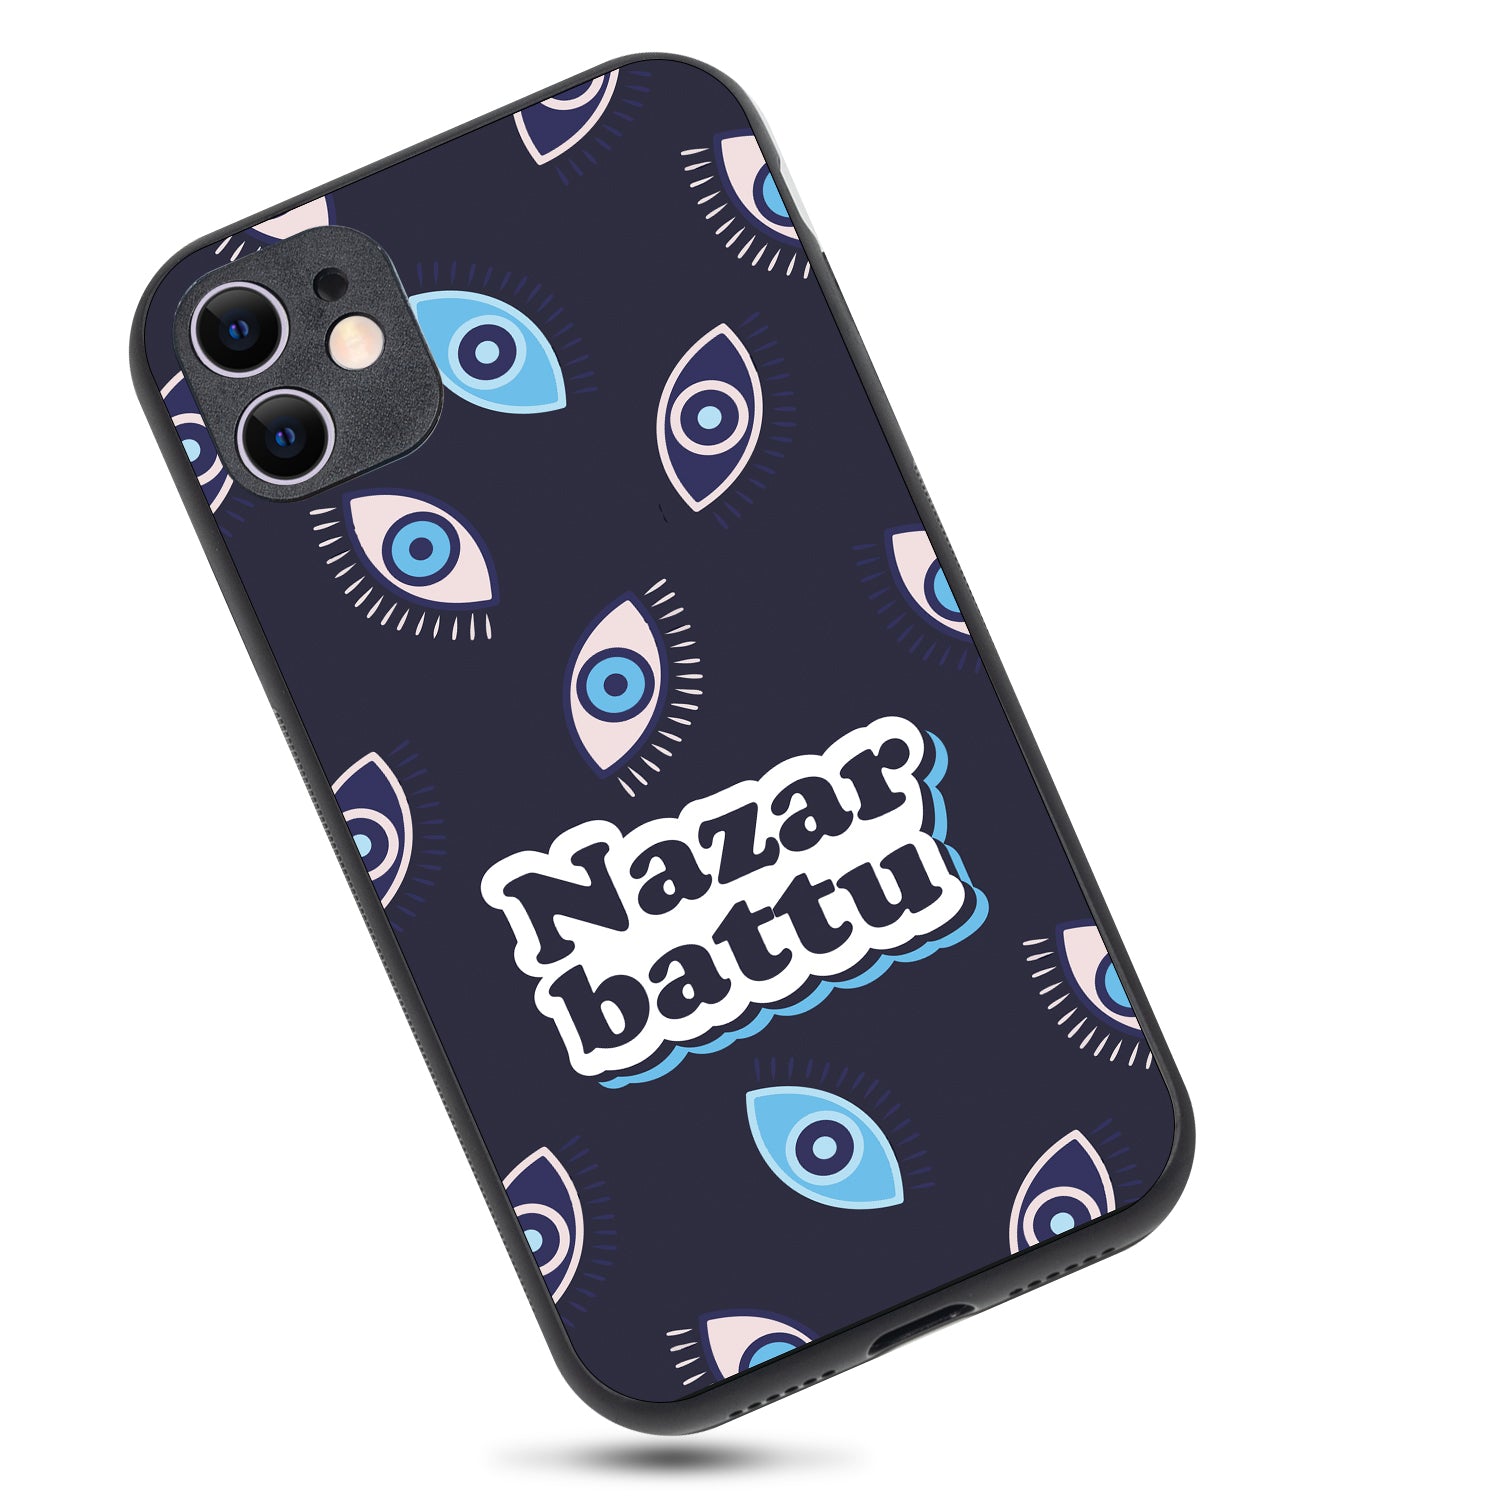 Nazar Battu Motivational Quotes iPhone 11 Case